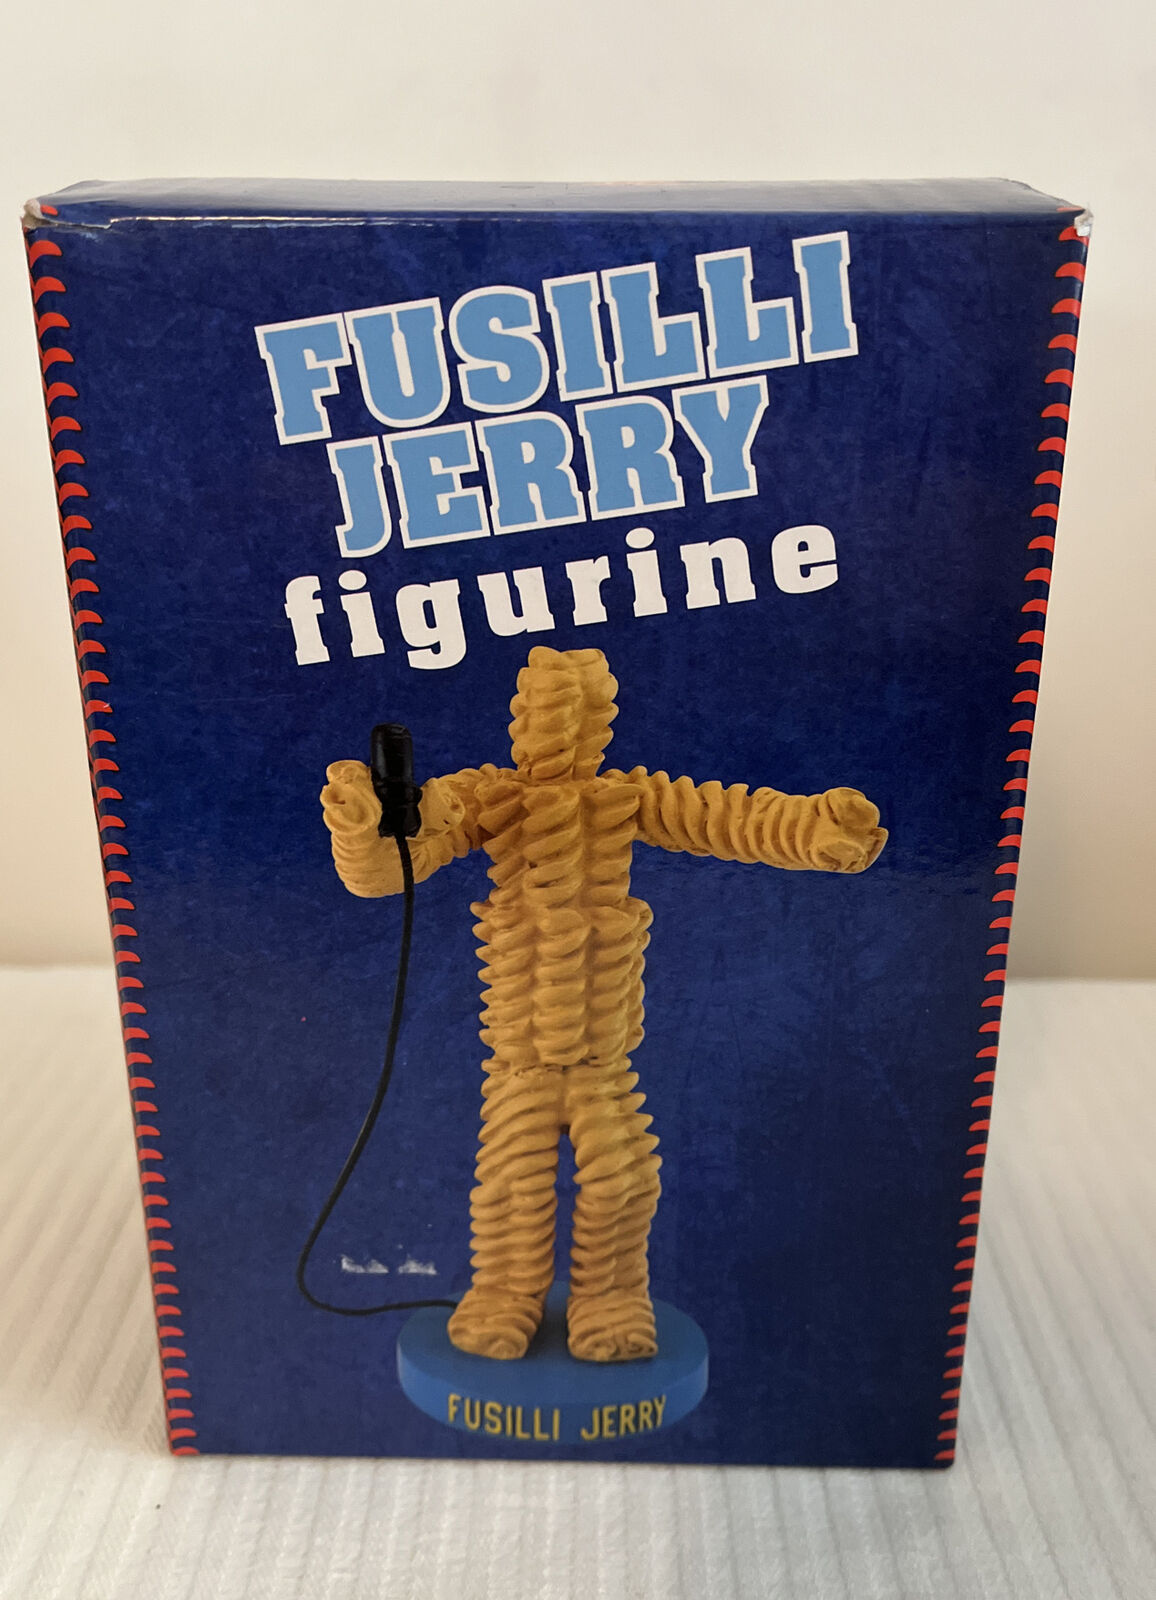 Promotional 30th Anniversary Fusilli Jerry Figurine Coyote Seinfeld New in box